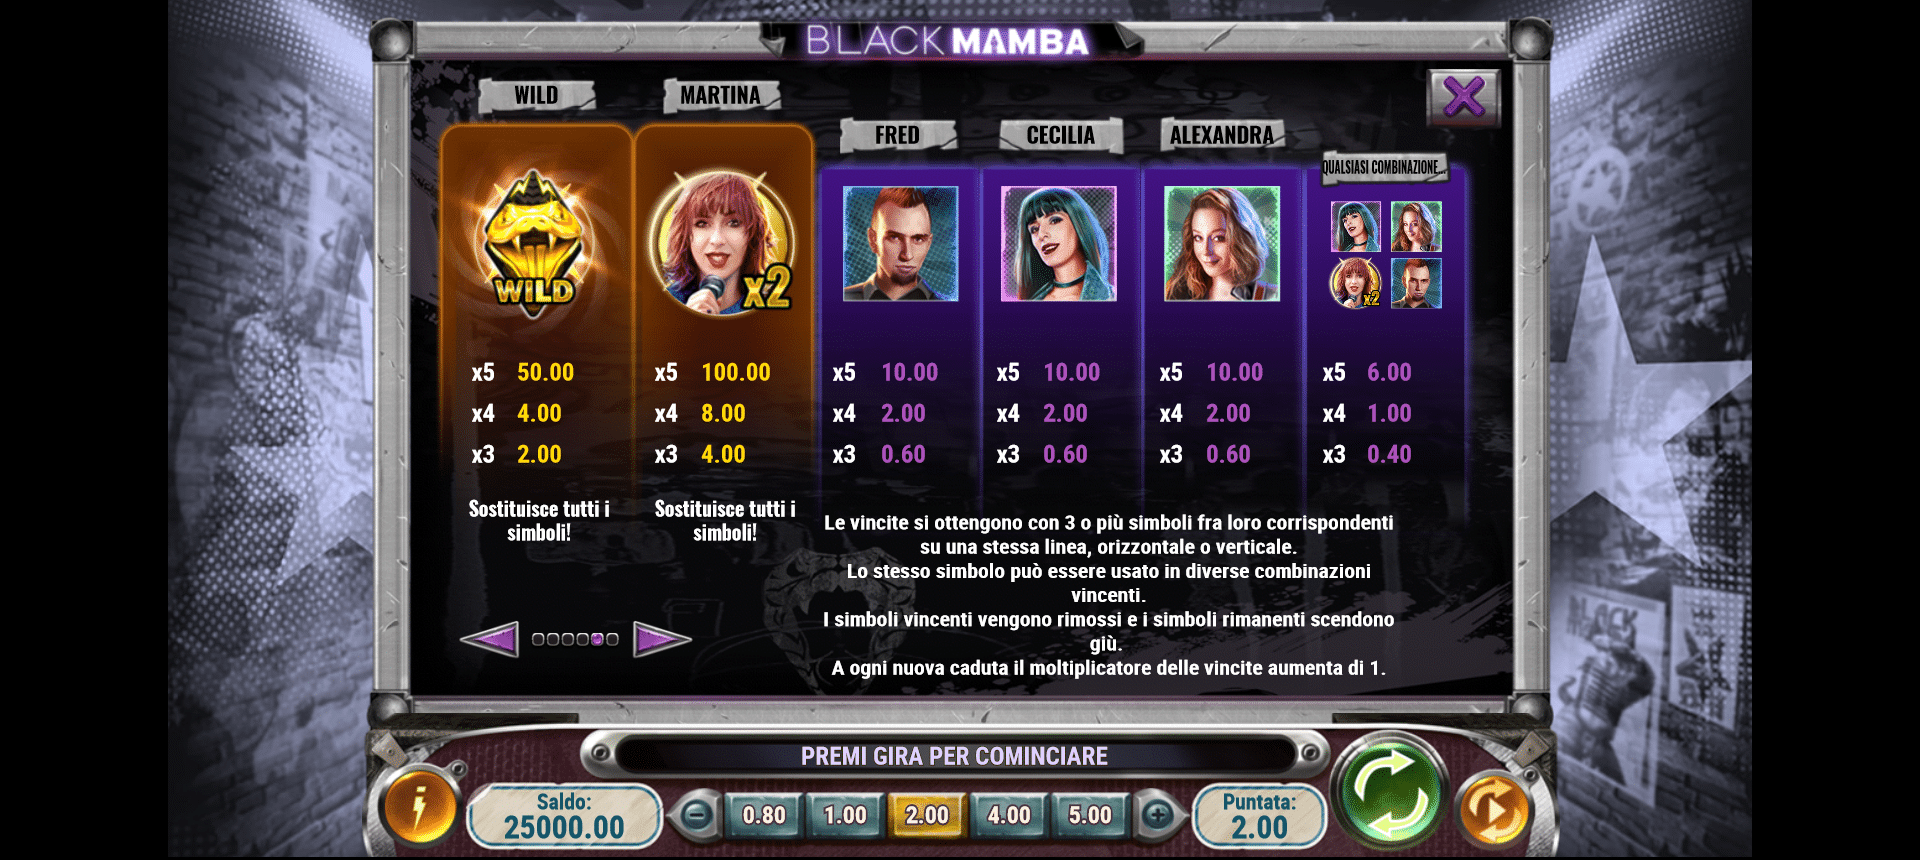 paytable della slot online black mamba